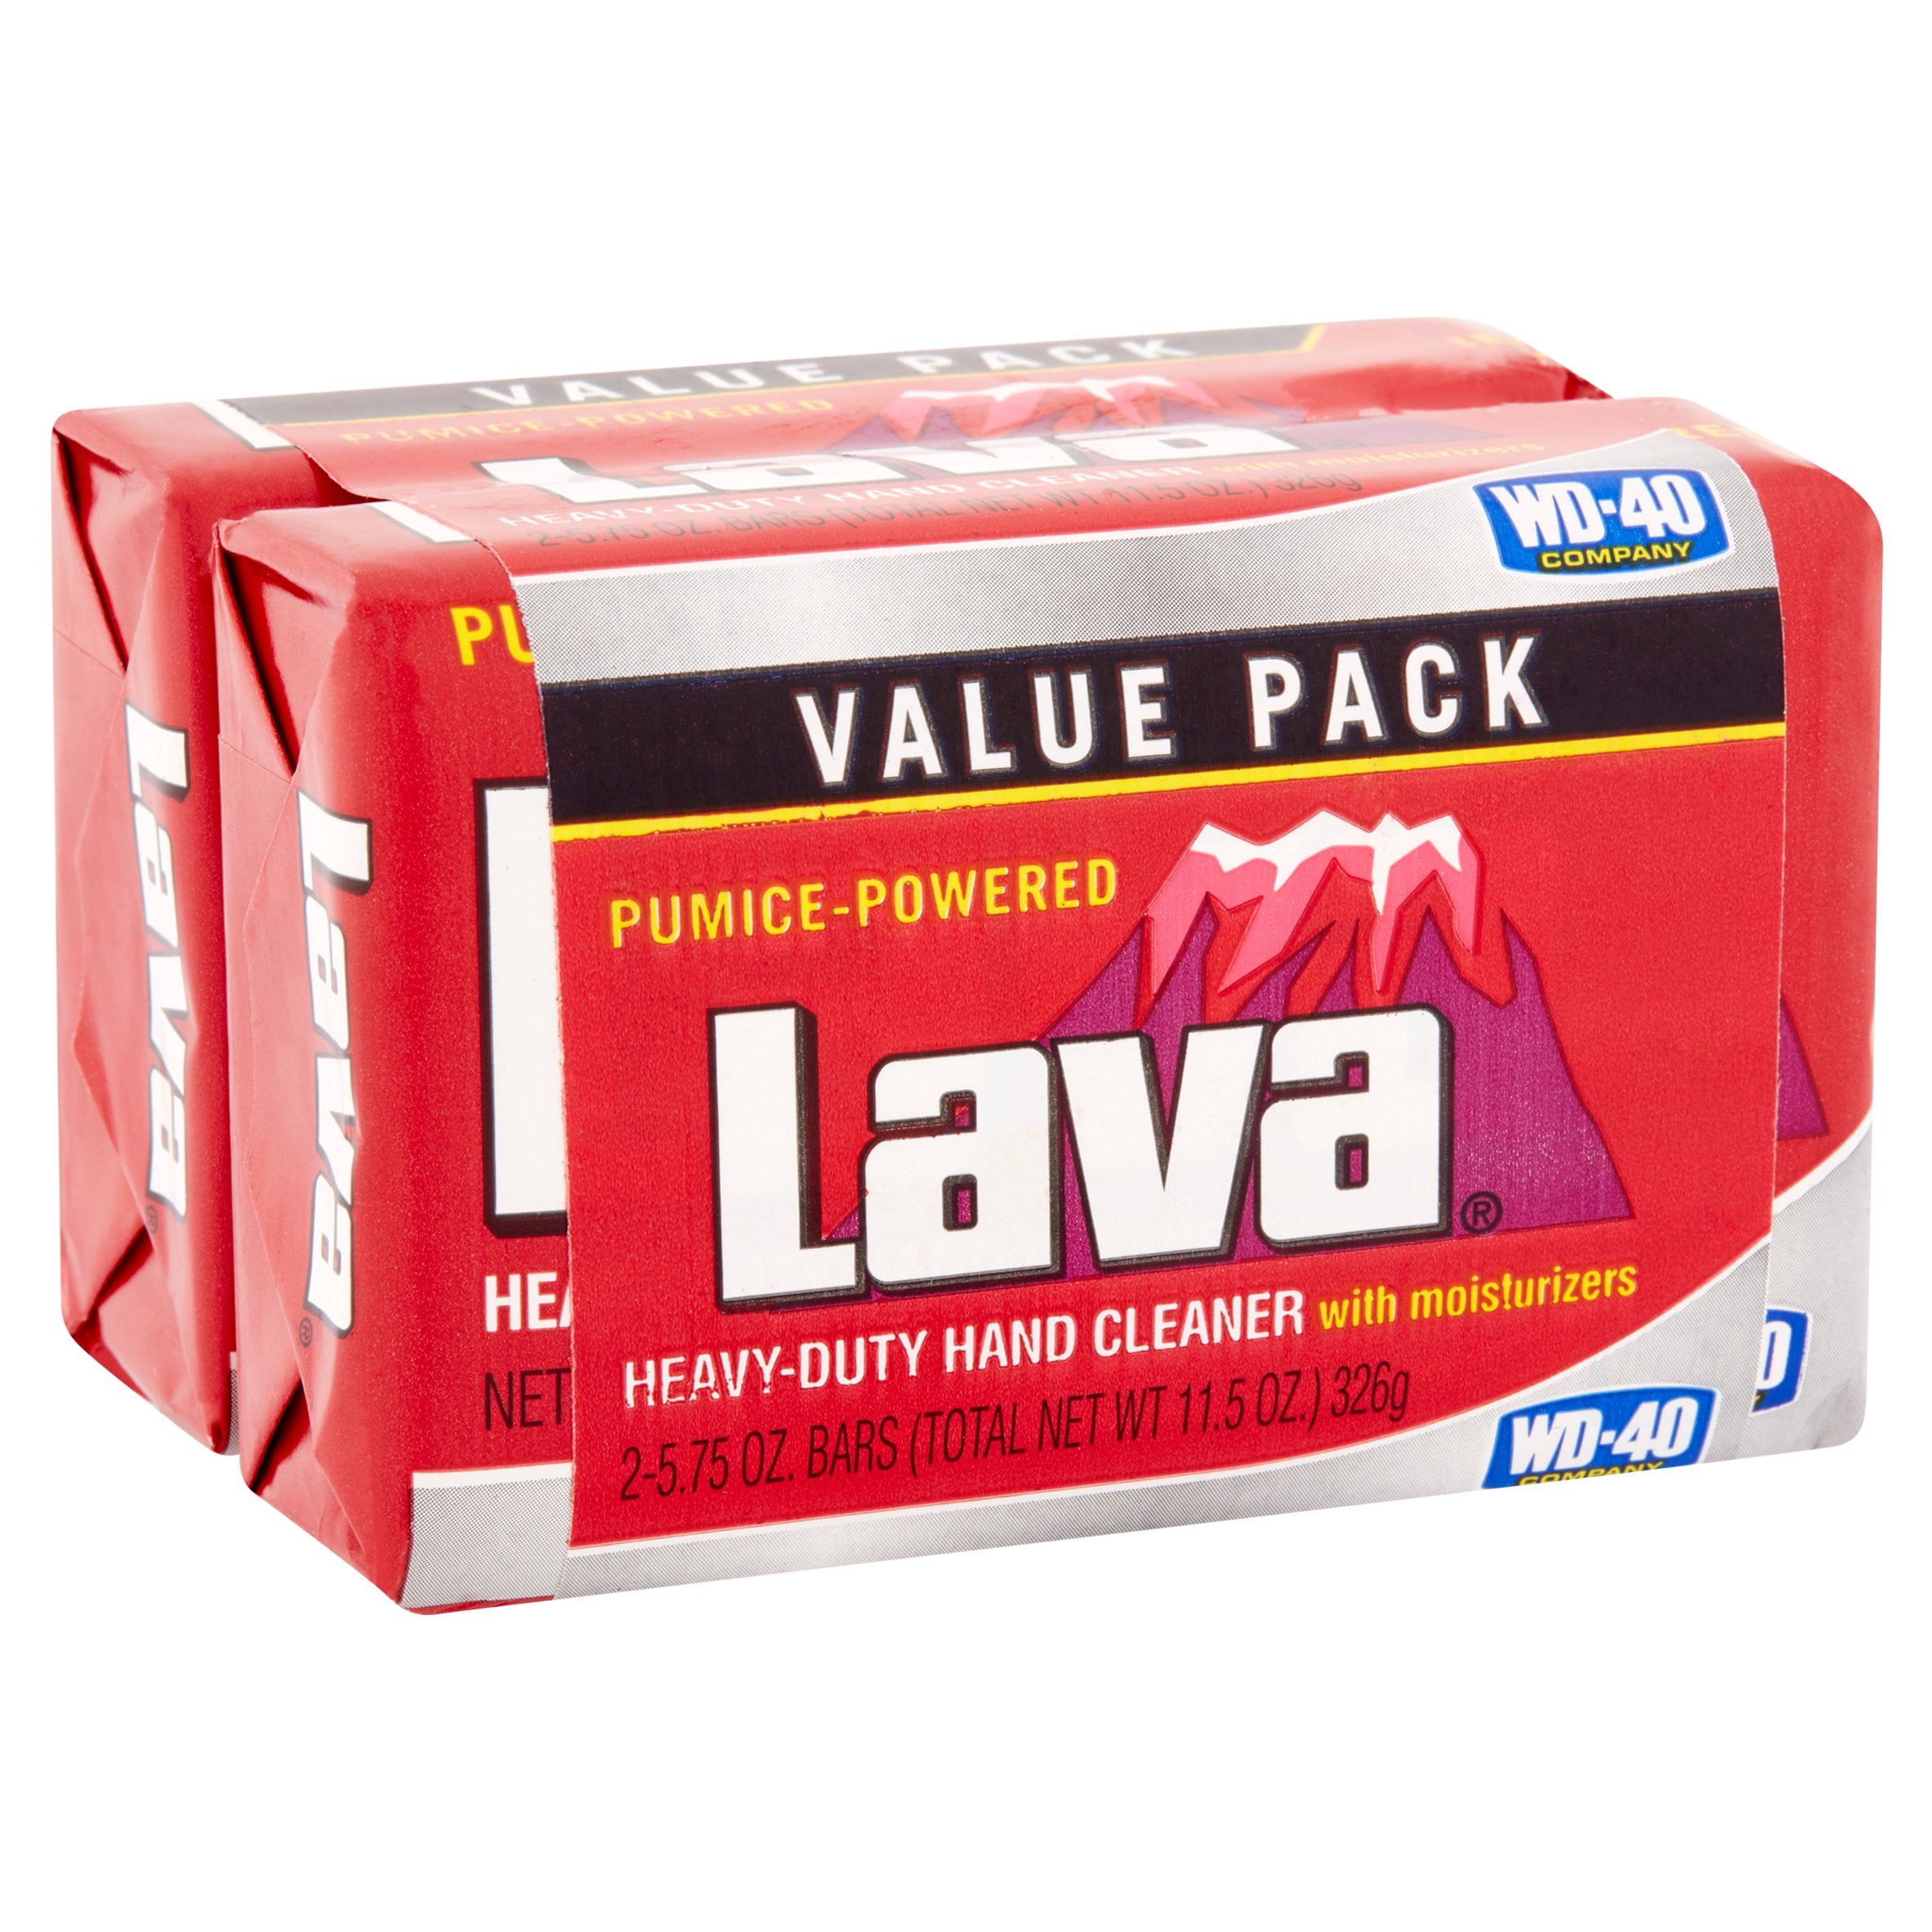 Lava - natural bar soap